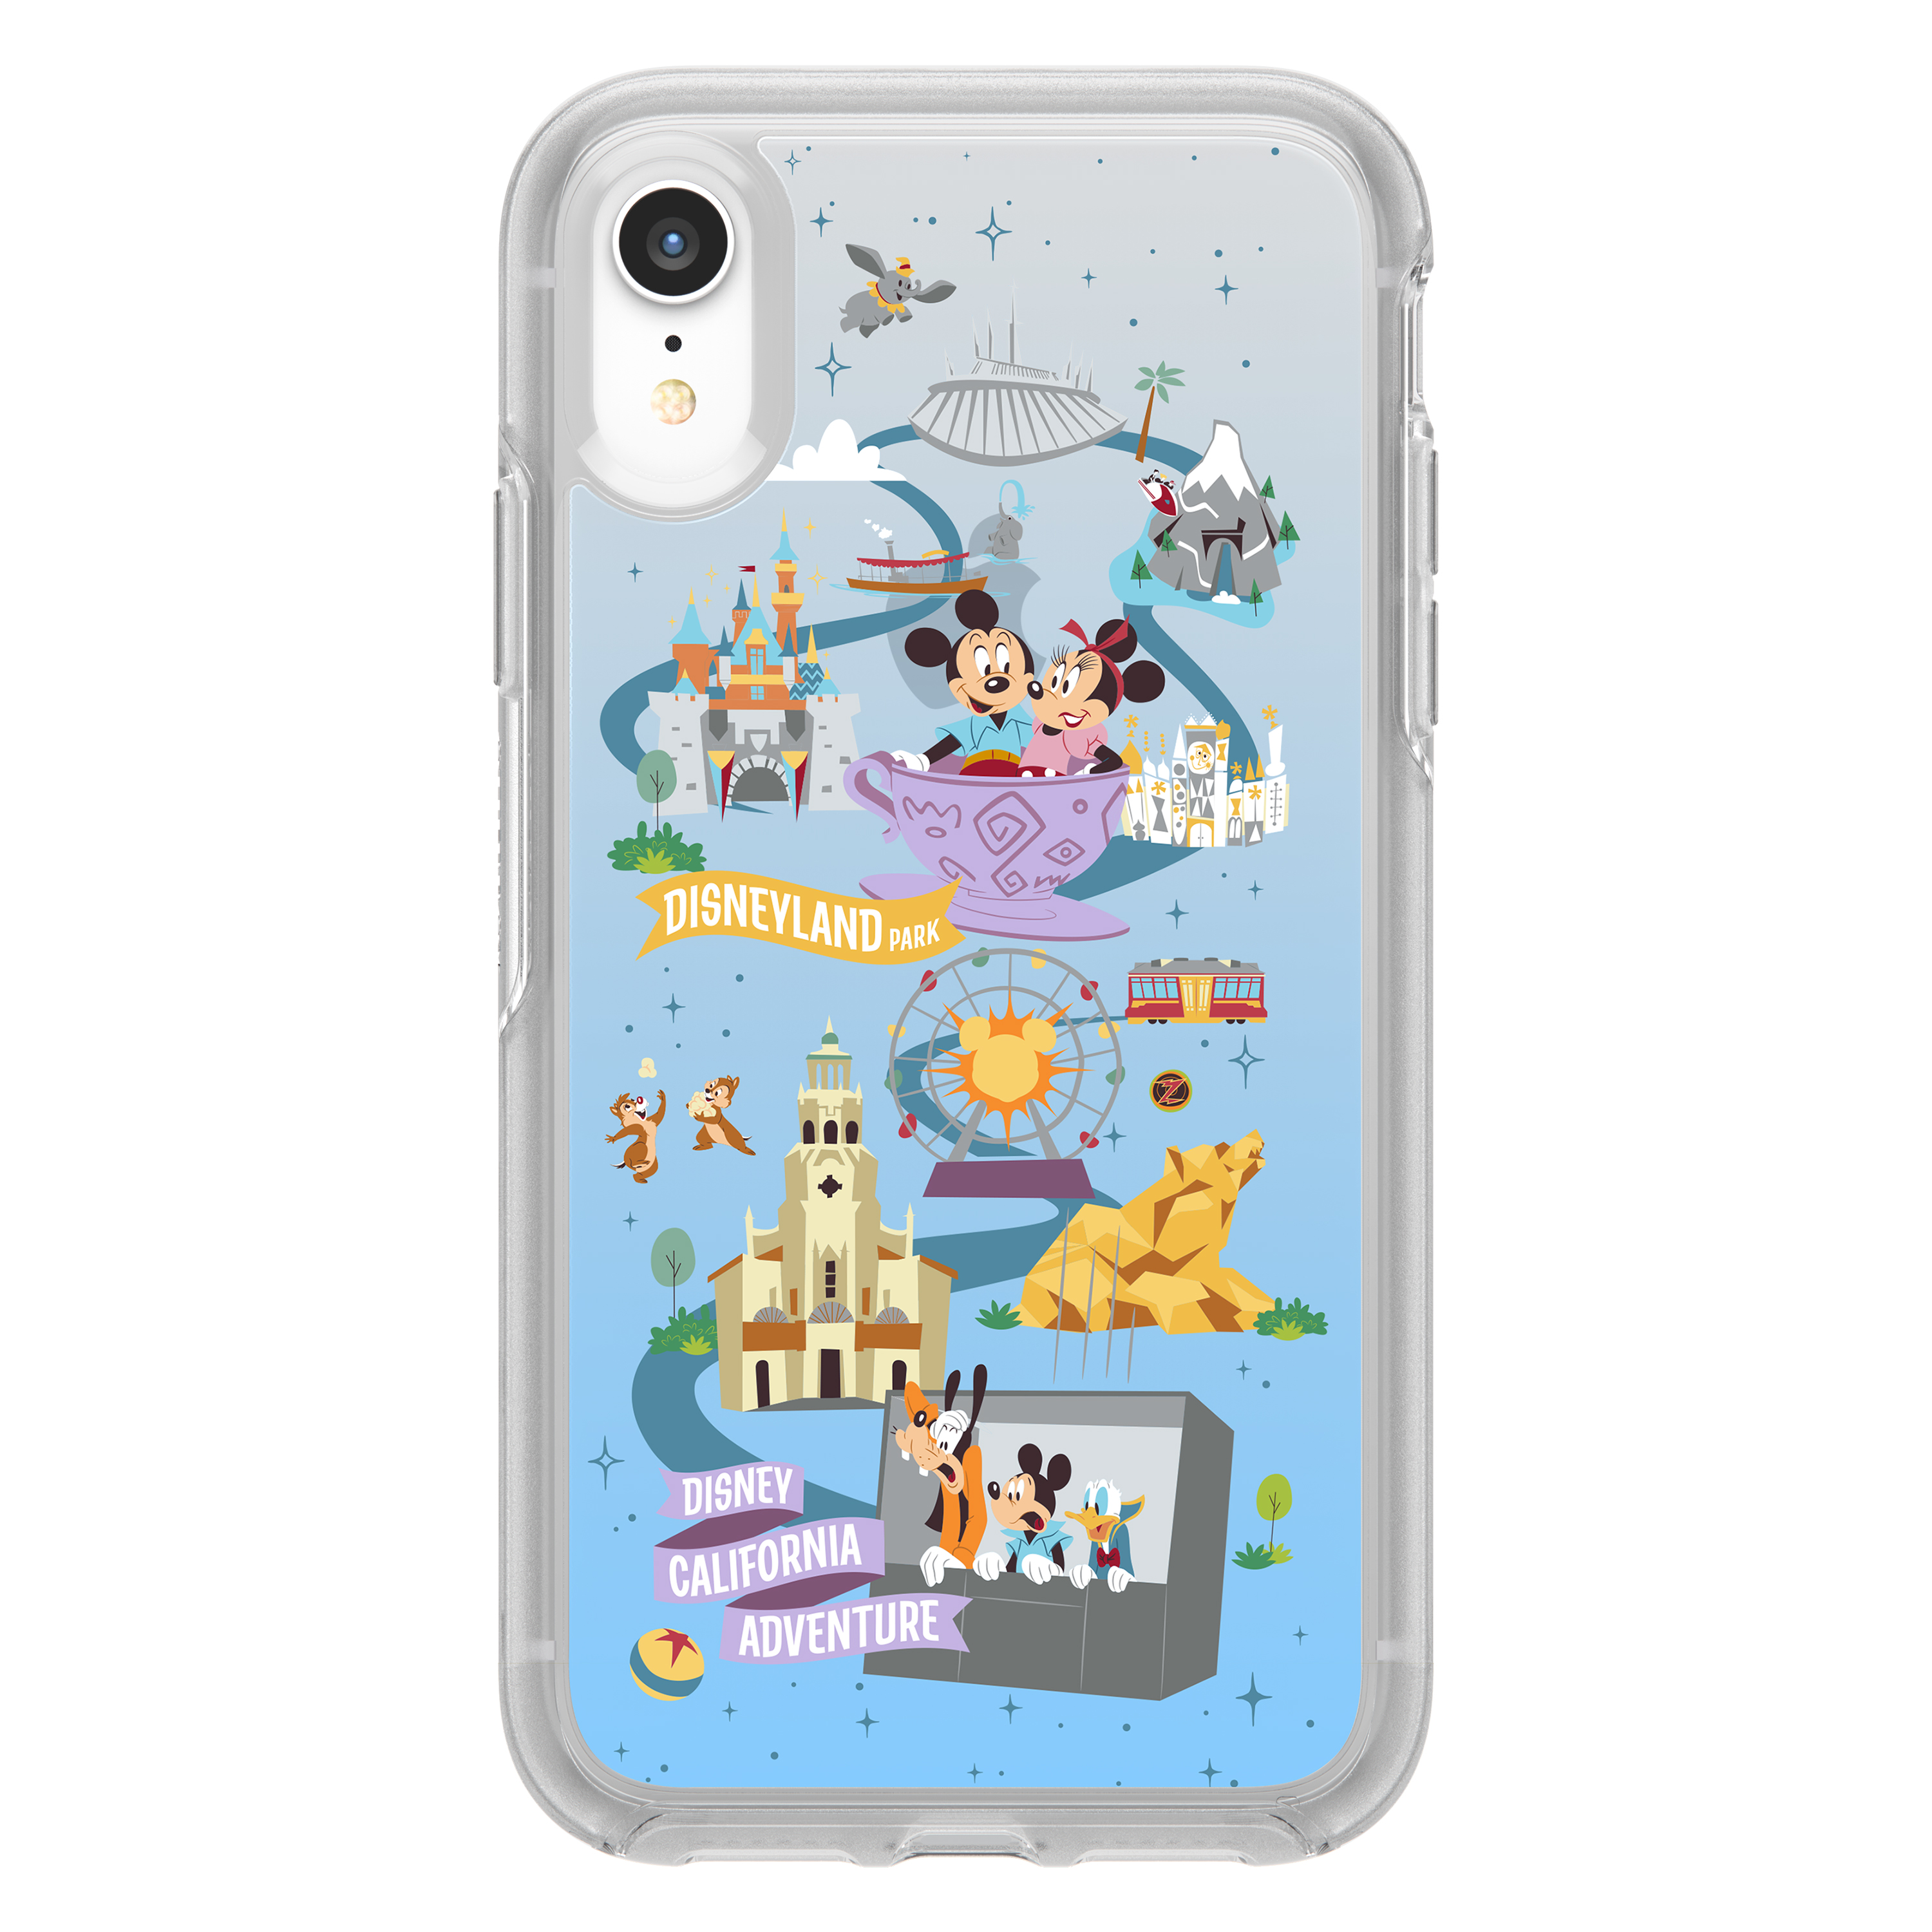 Disney Phone Cases Otterbox Exclusive Disney Parks Designs